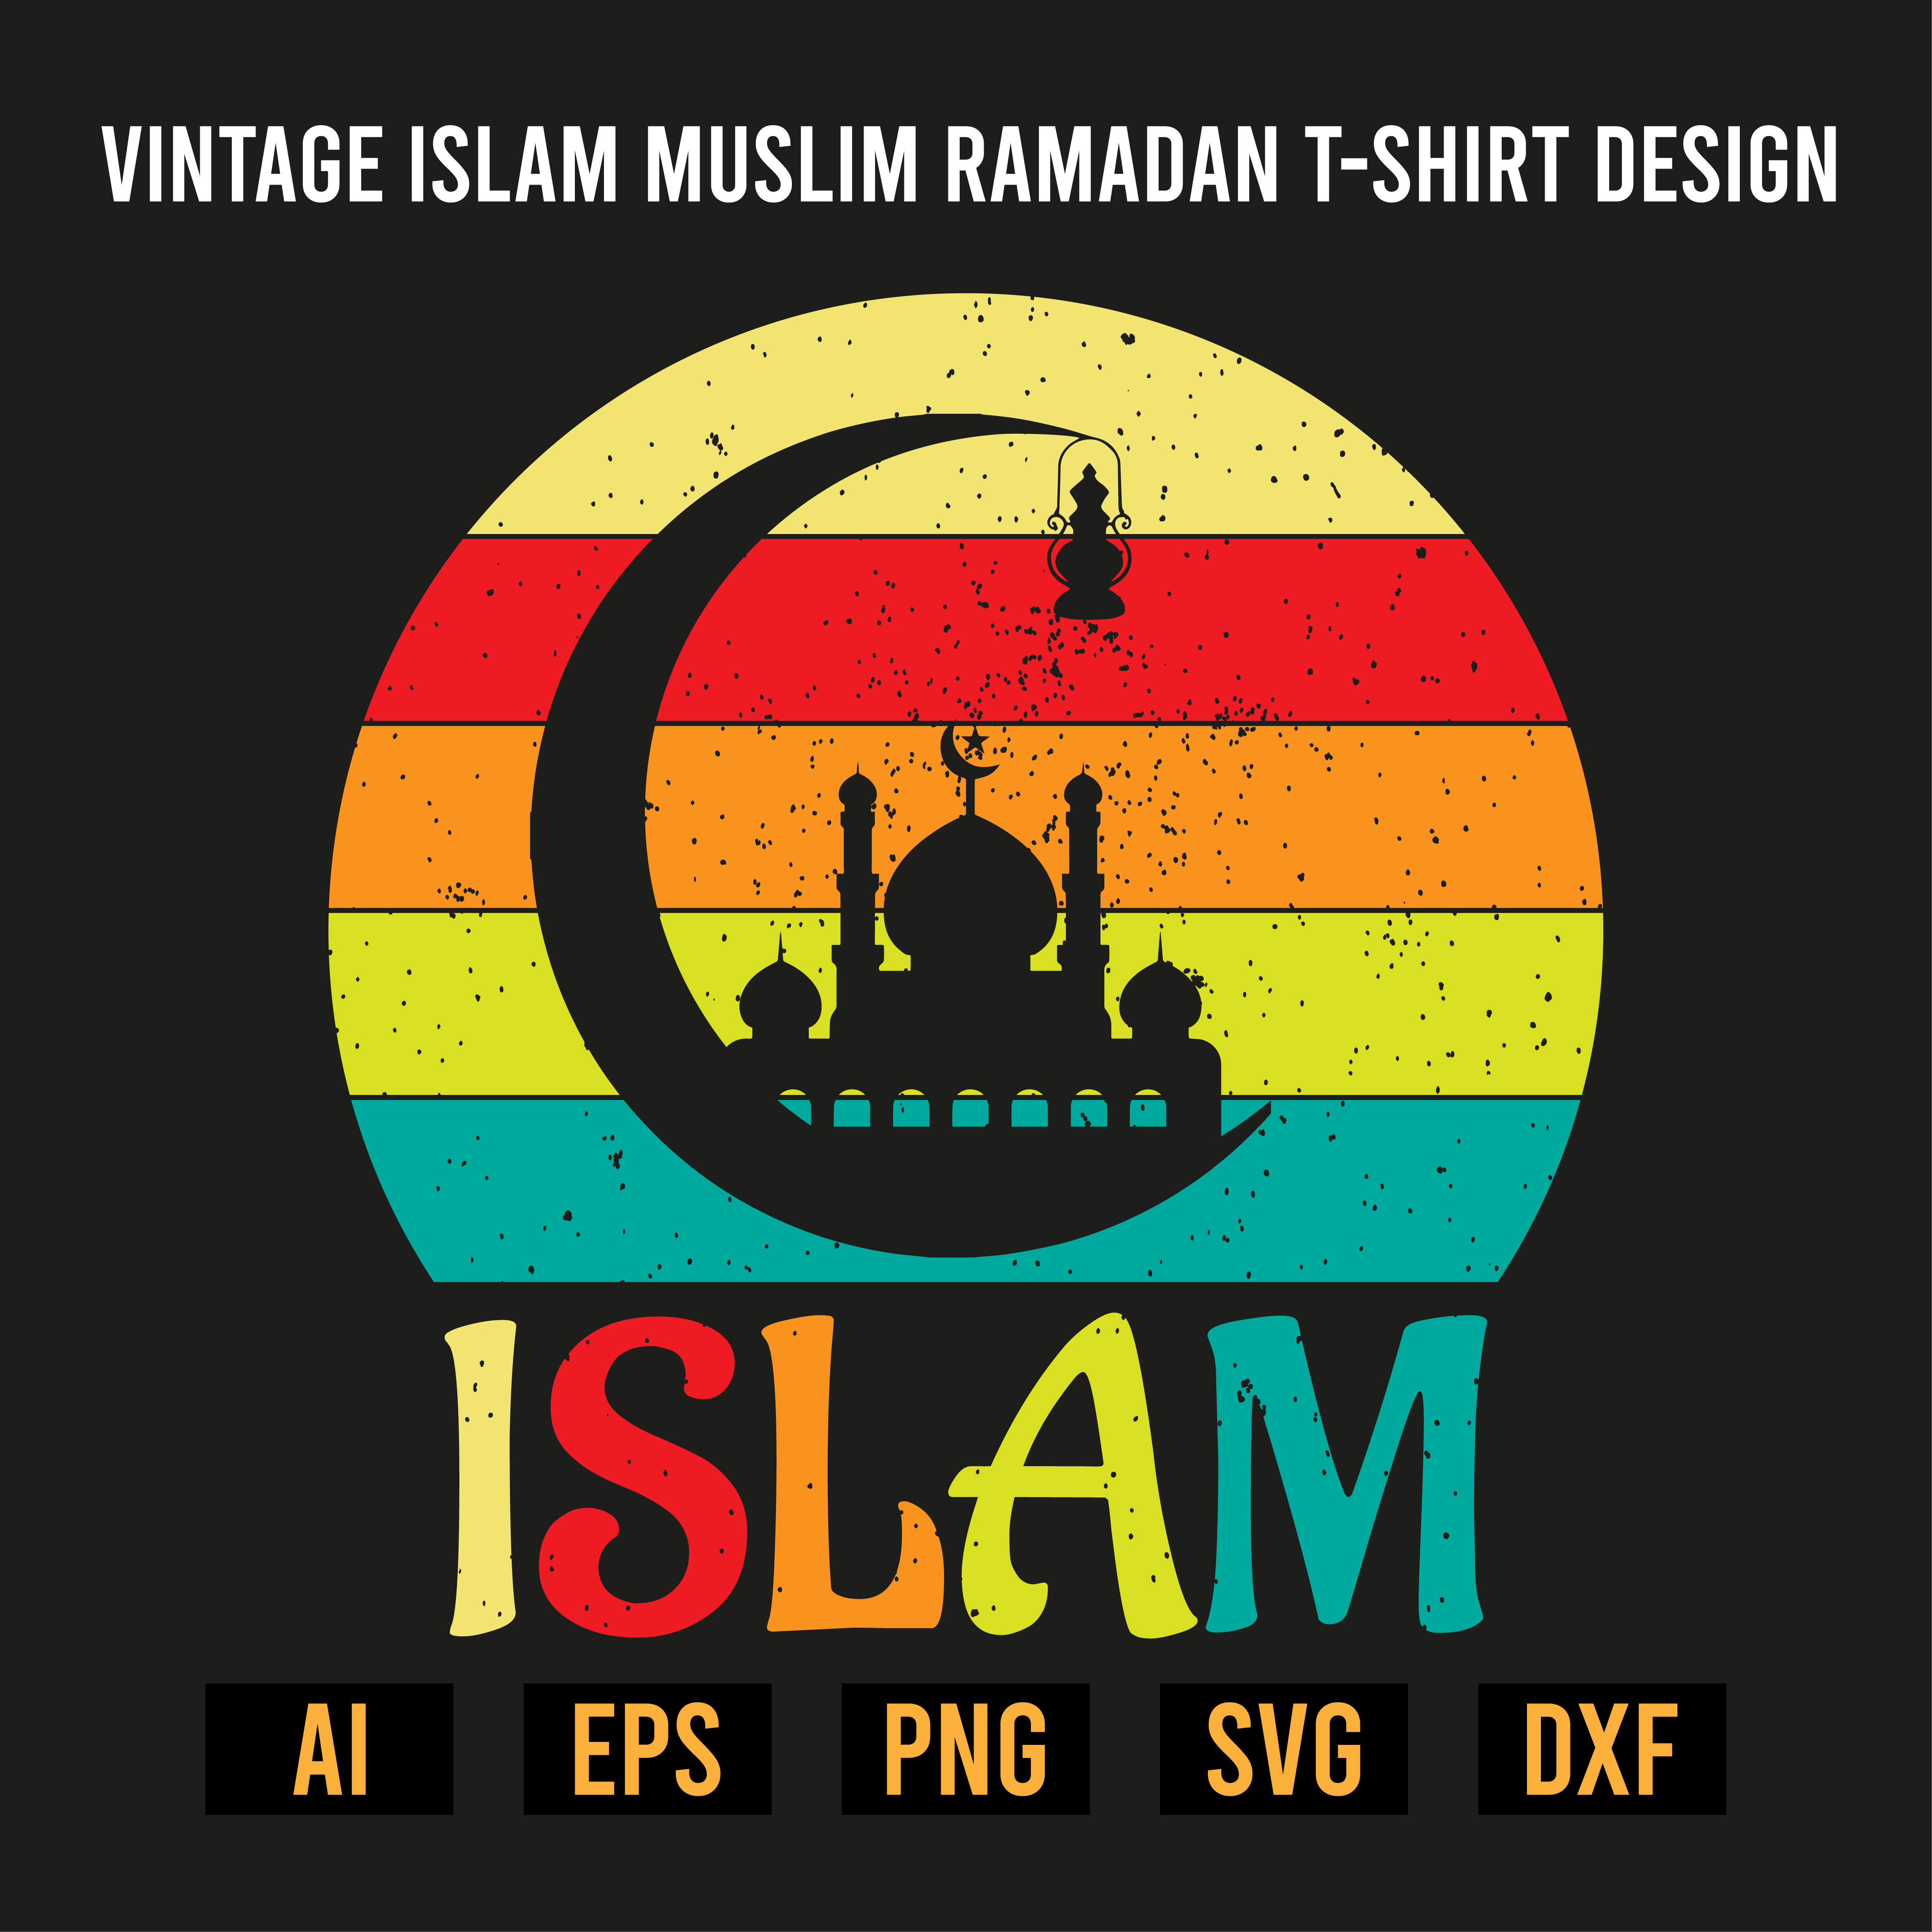 Vintage Islam Muslim Ramadan T-Shirt Design preview image.